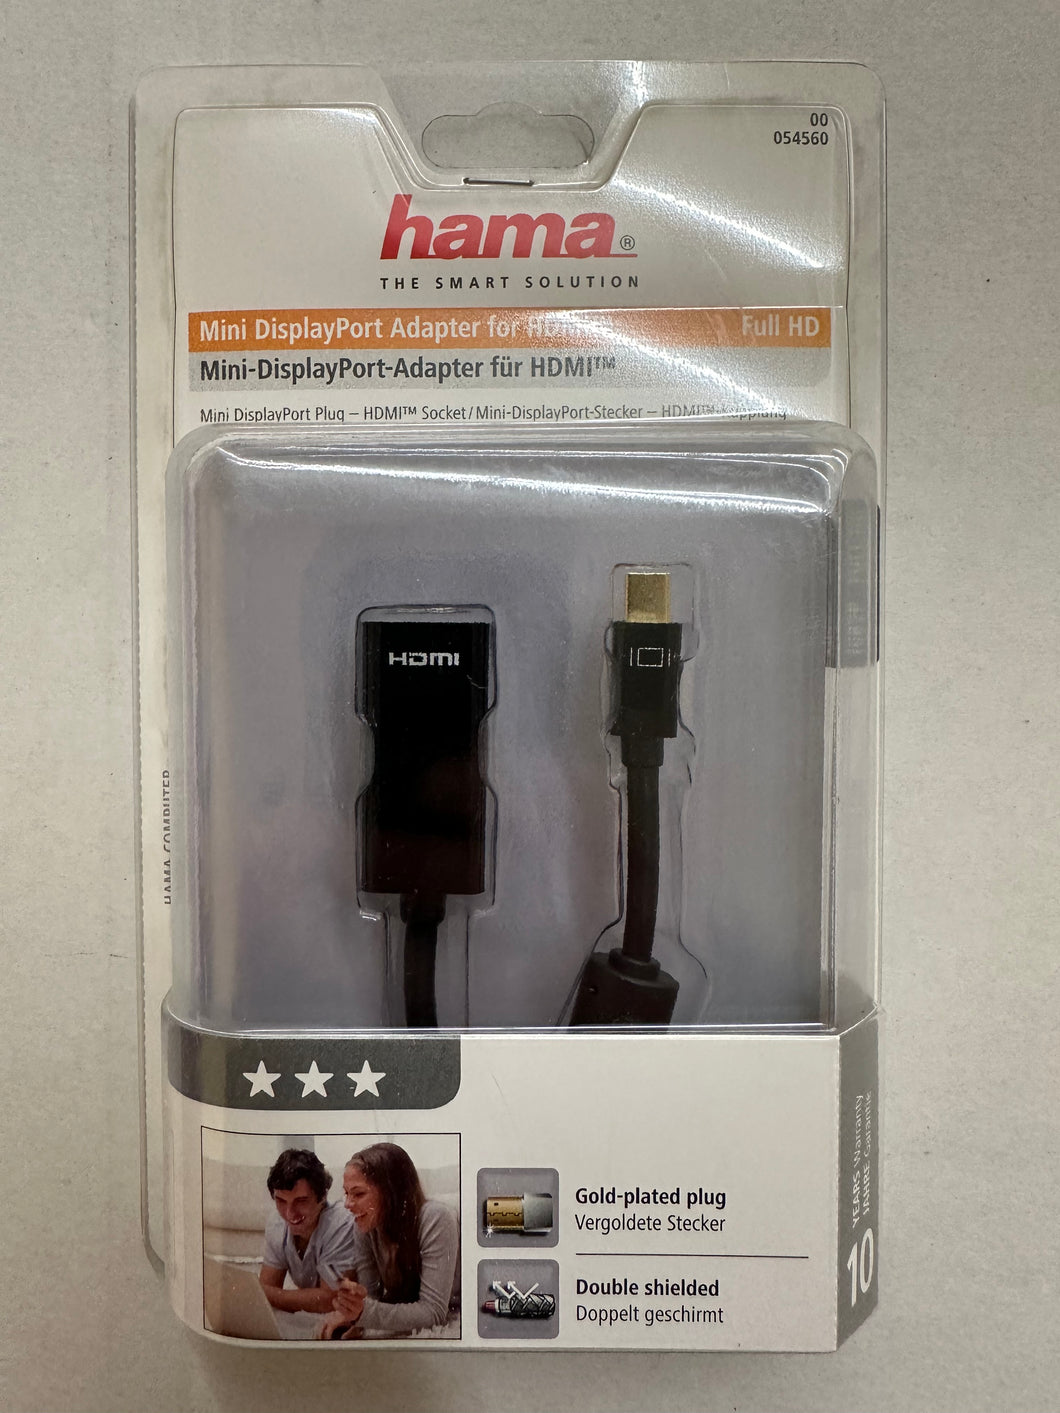 Hama 00054560 Mini-DisplayPort-Adapter für HDMI, Full HD (Schwarz)